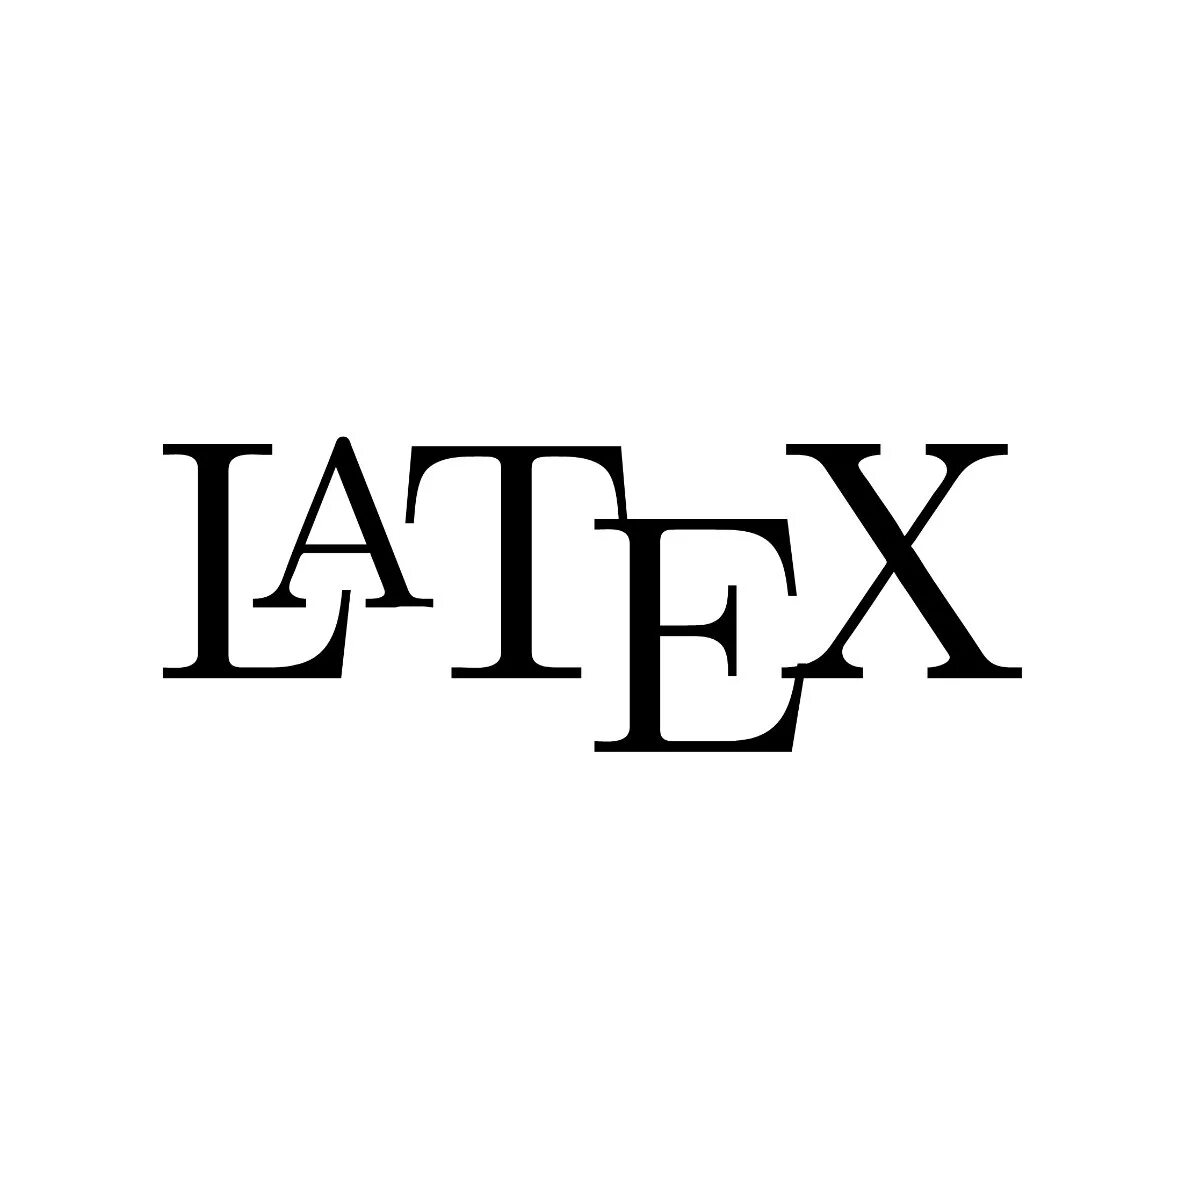 Latex math. Latex значки. Latex программа. Значок латекс. Tex язык программирования.